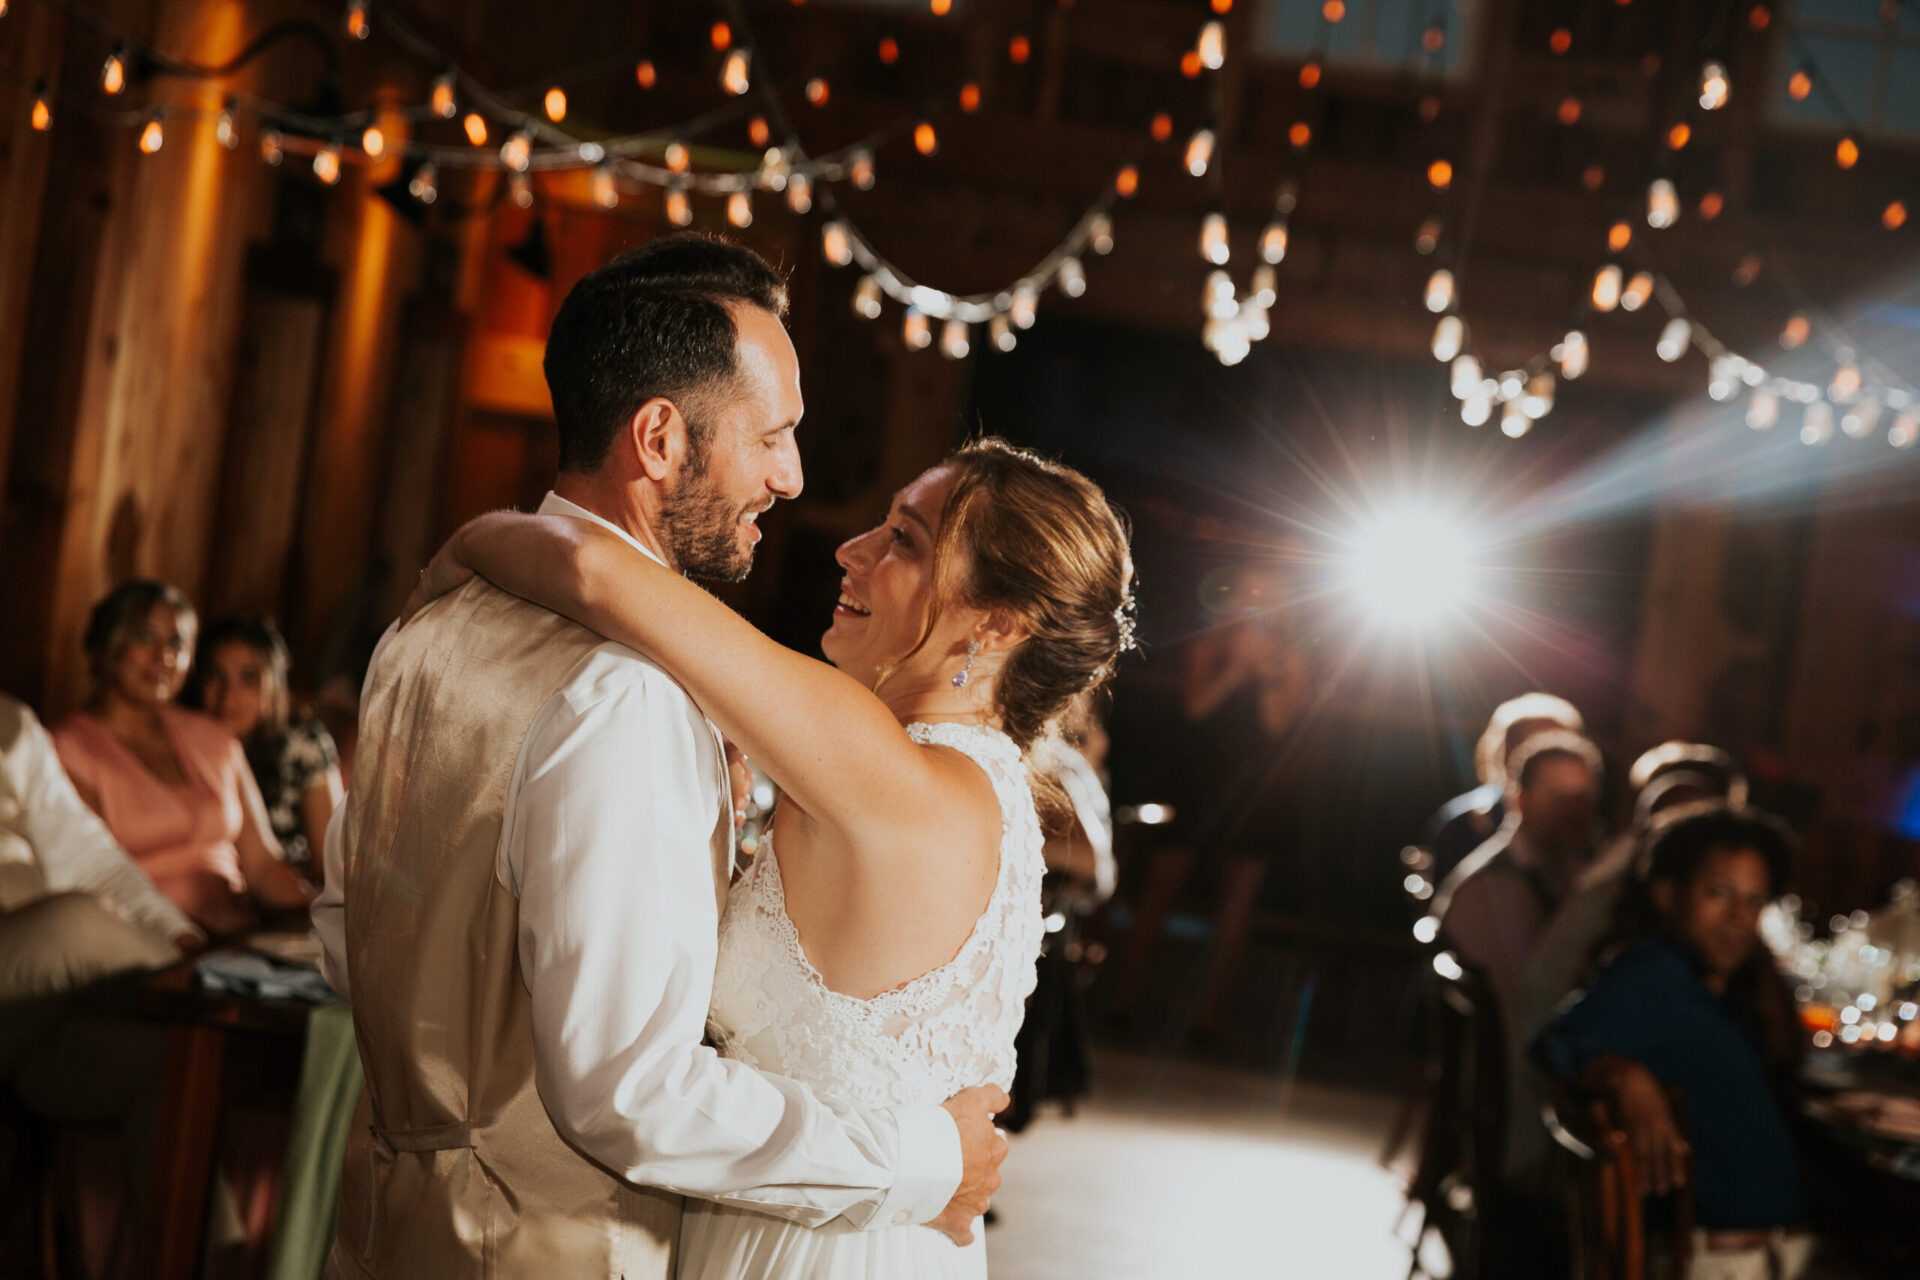 Zion Springs bride and groom dancing under twinkling lights